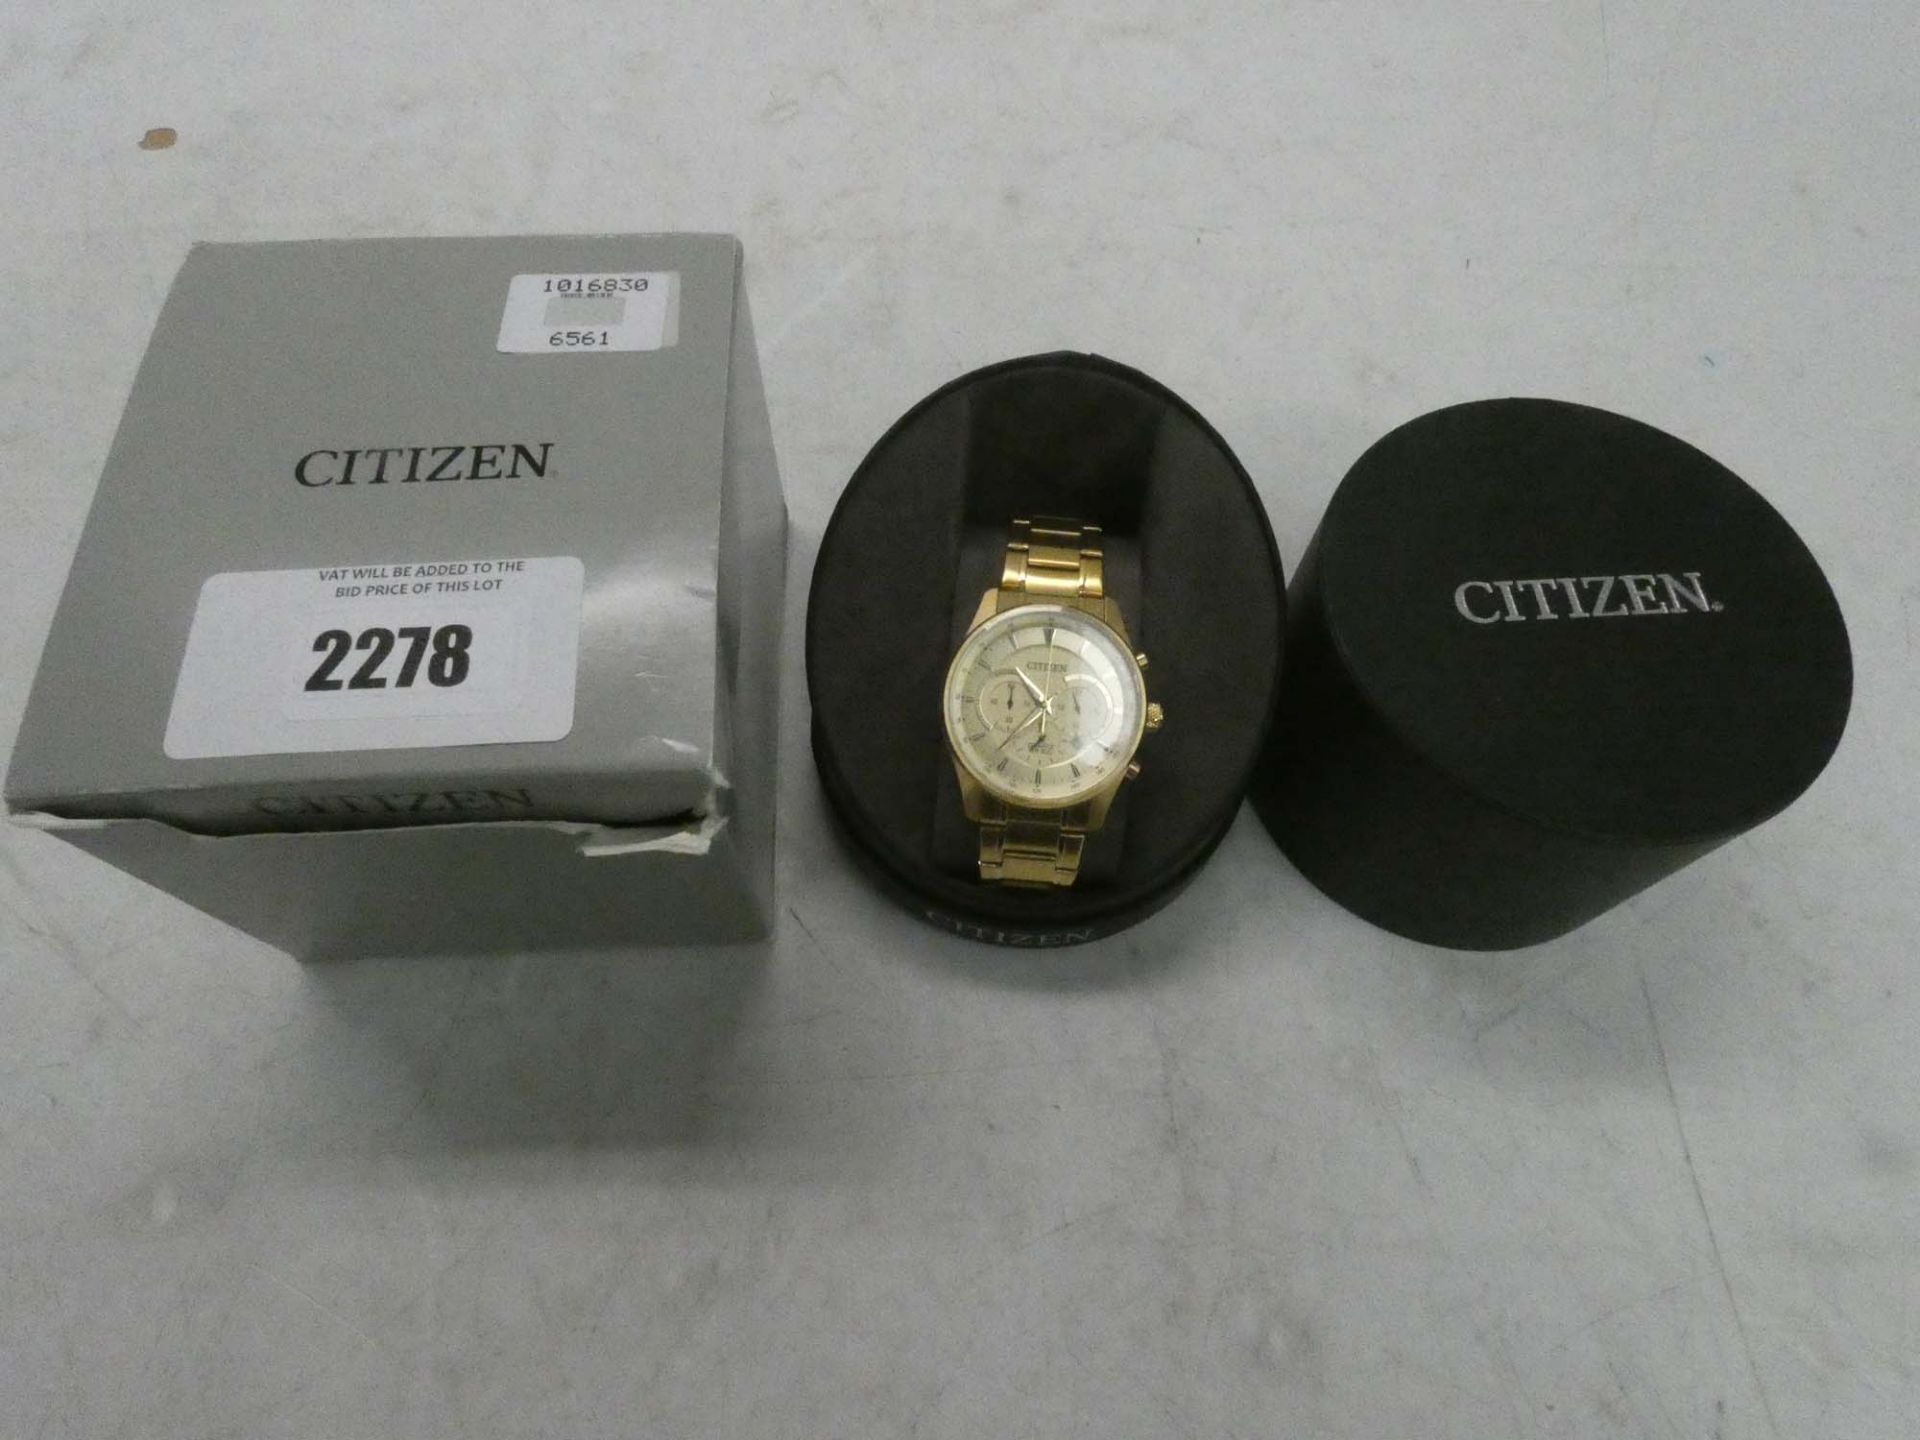 Citizen 0520 wristwatch with box